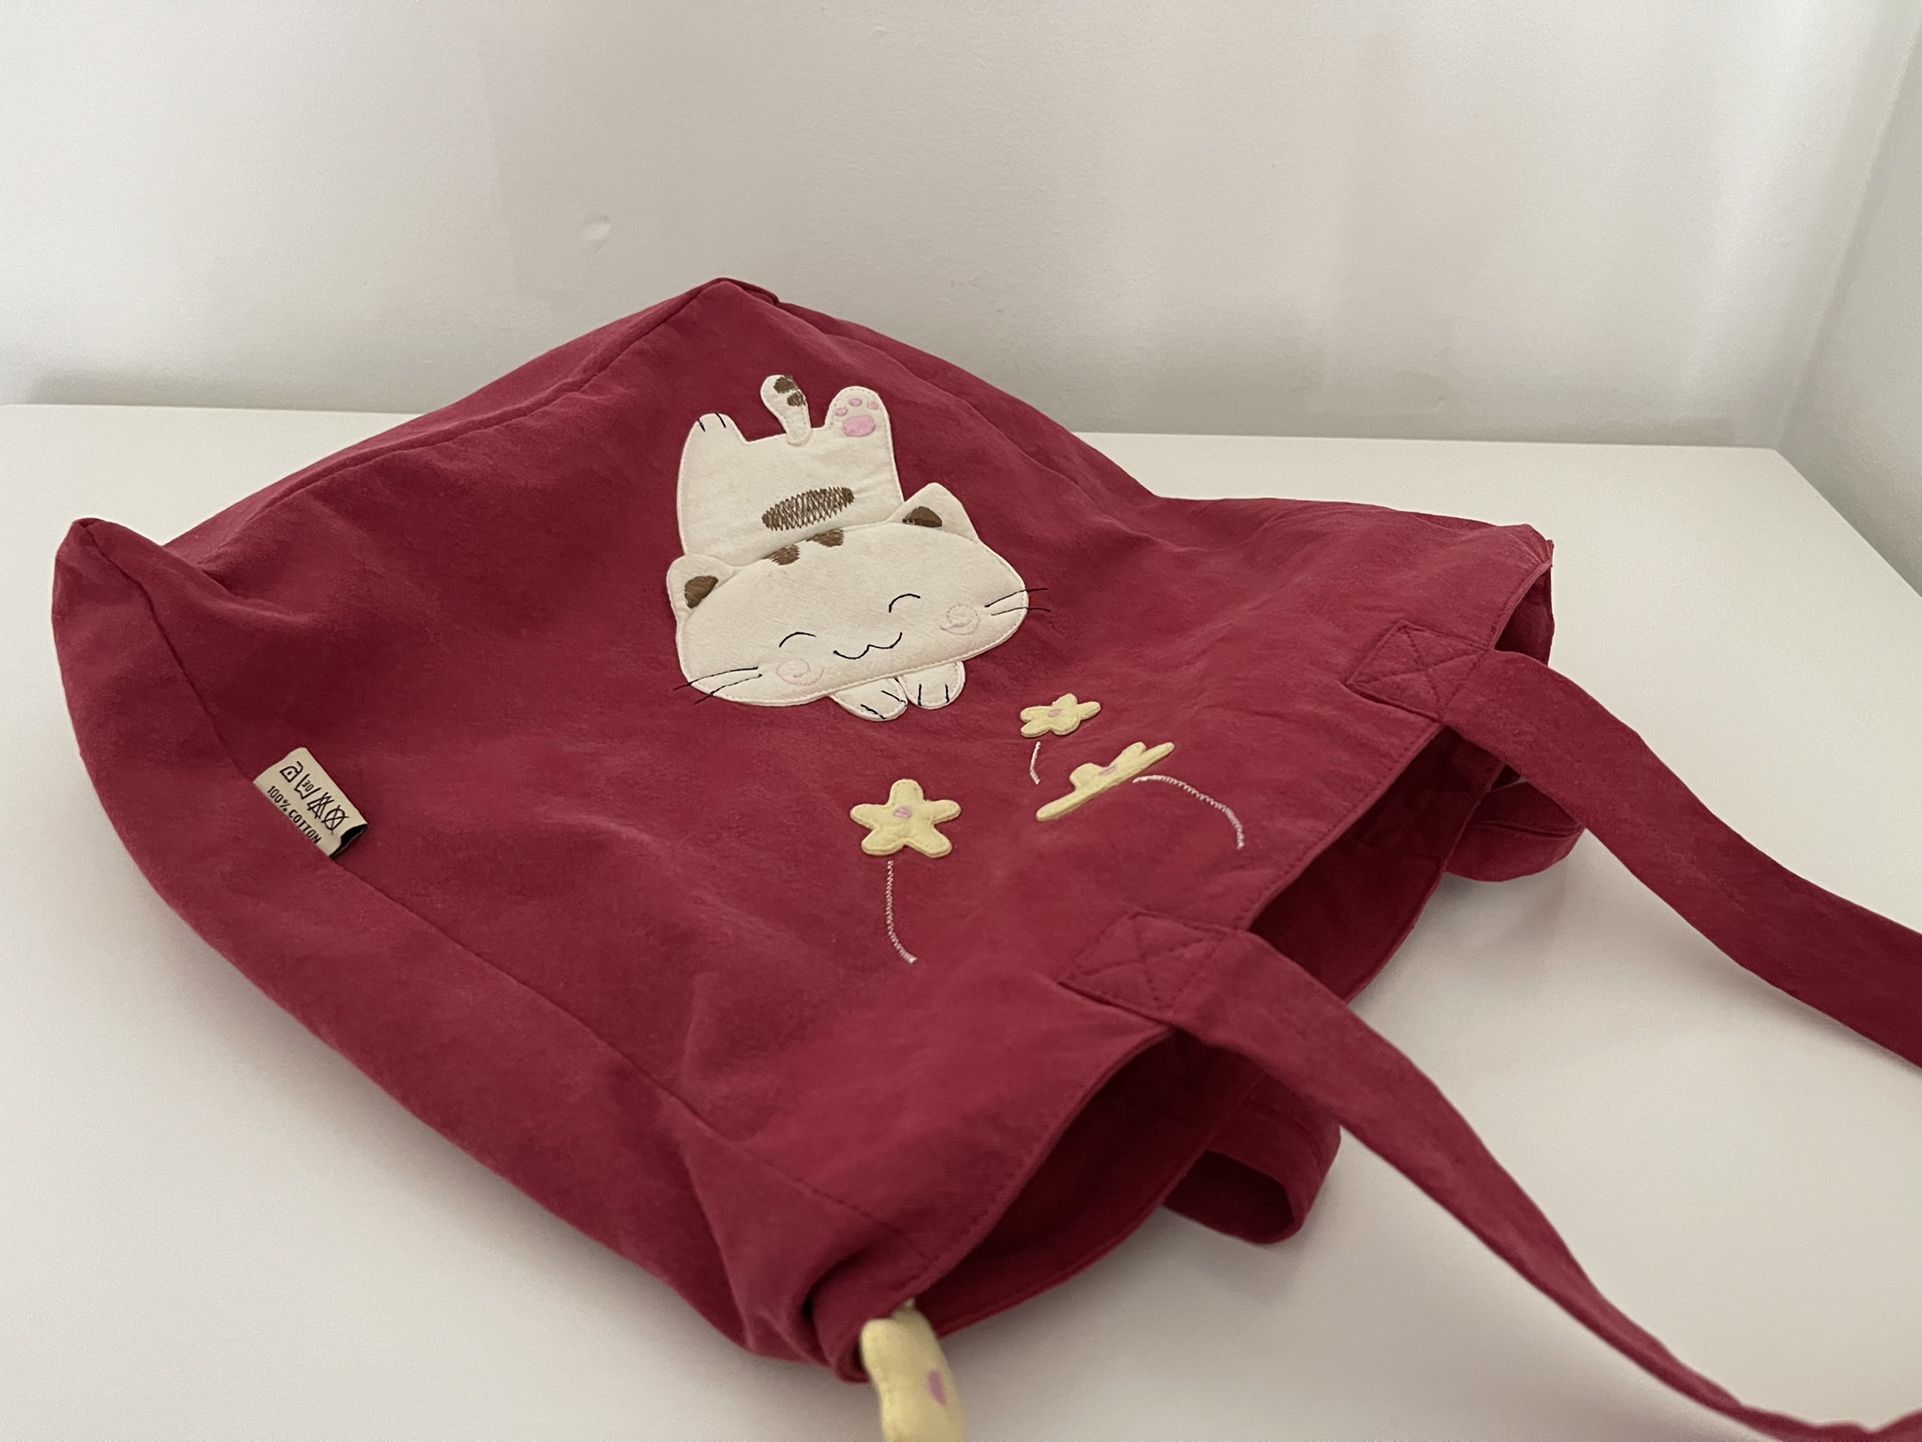 Under One Sky Maneki-neko Inspired Cats Mini Backpack Black, Red, White.  NWOT for Sale in Seattle, WA - OfferUp